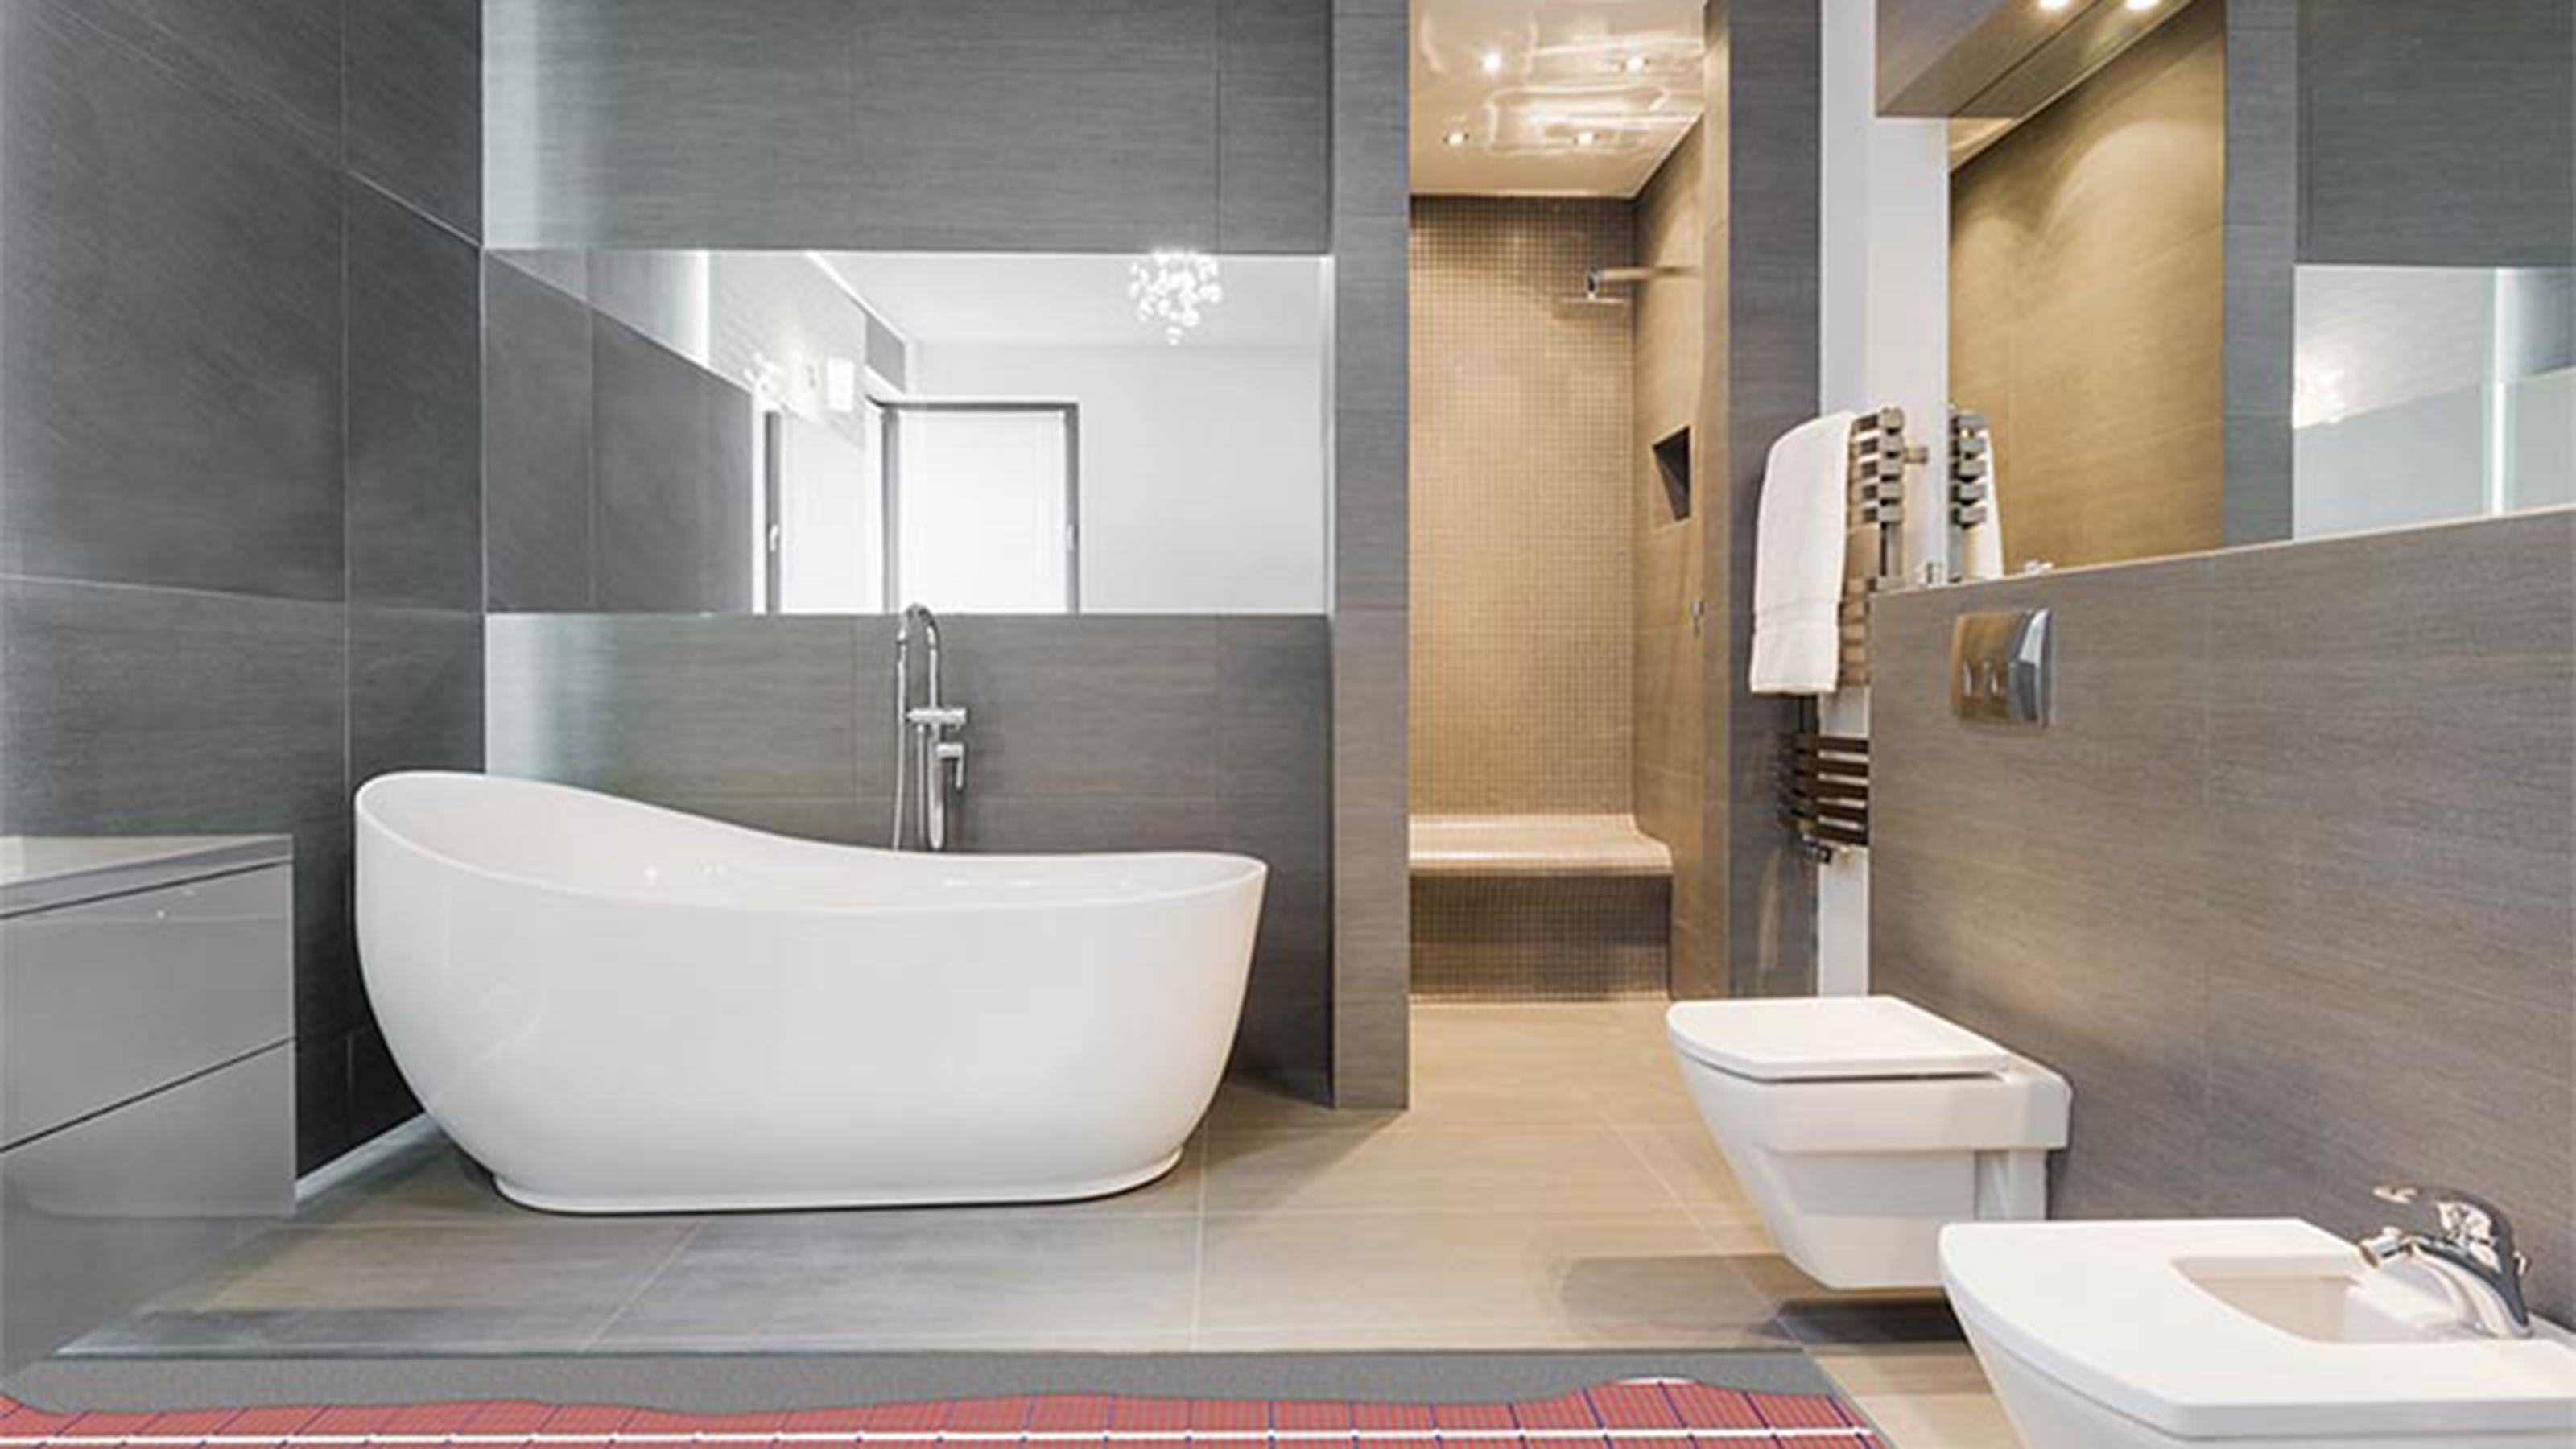 White and grey luxury bathroom suite with bathtub, shower, mirror and underfloor heating